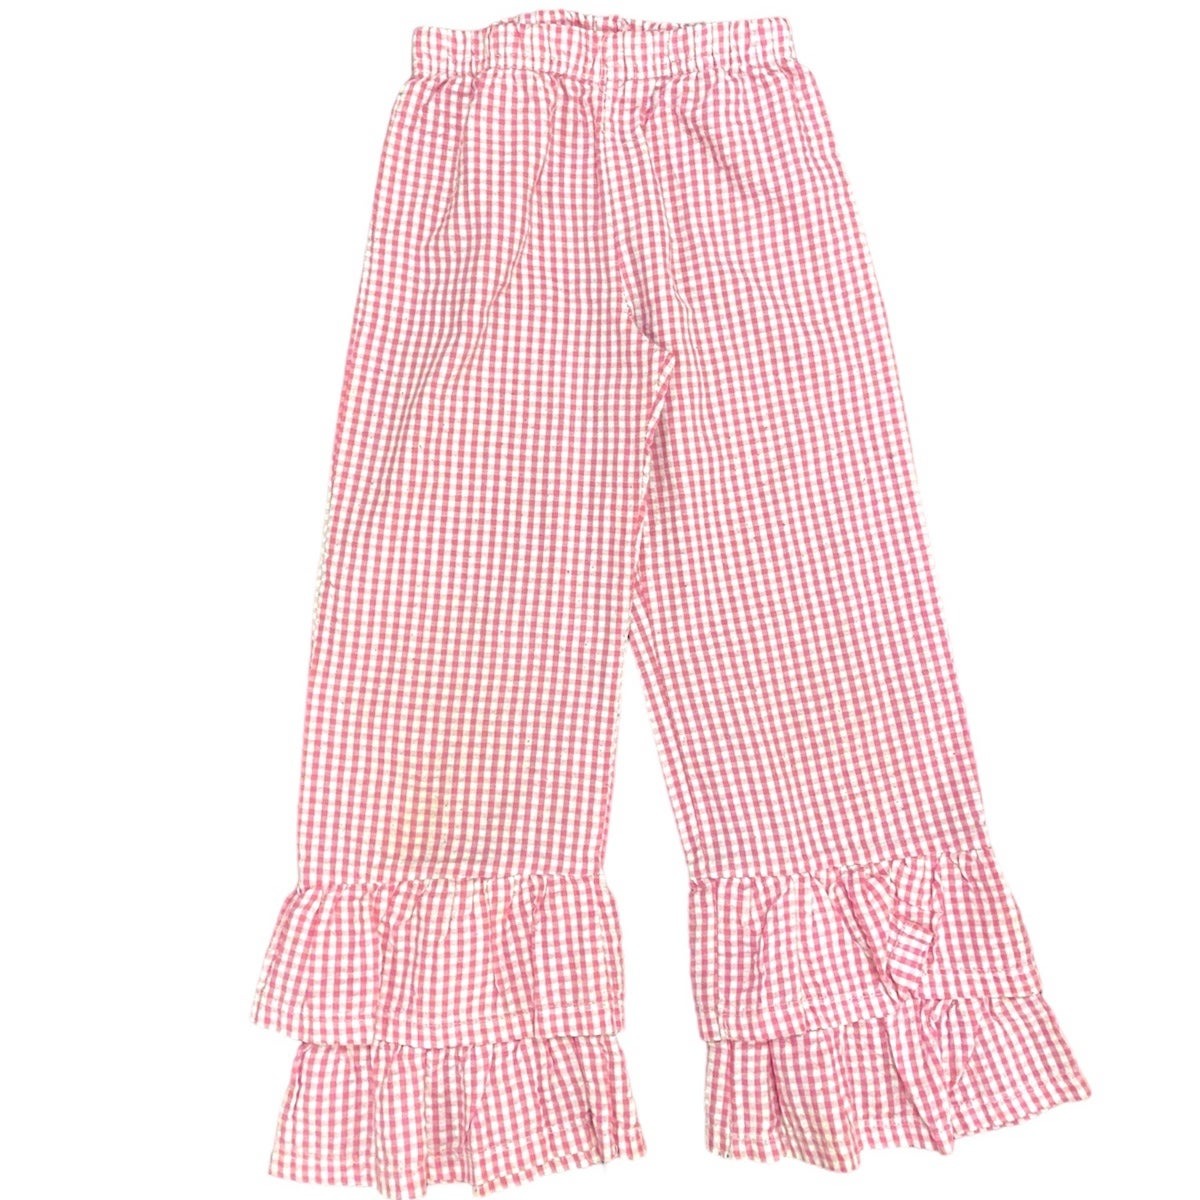 Size 4 pink gingham ruffle pants